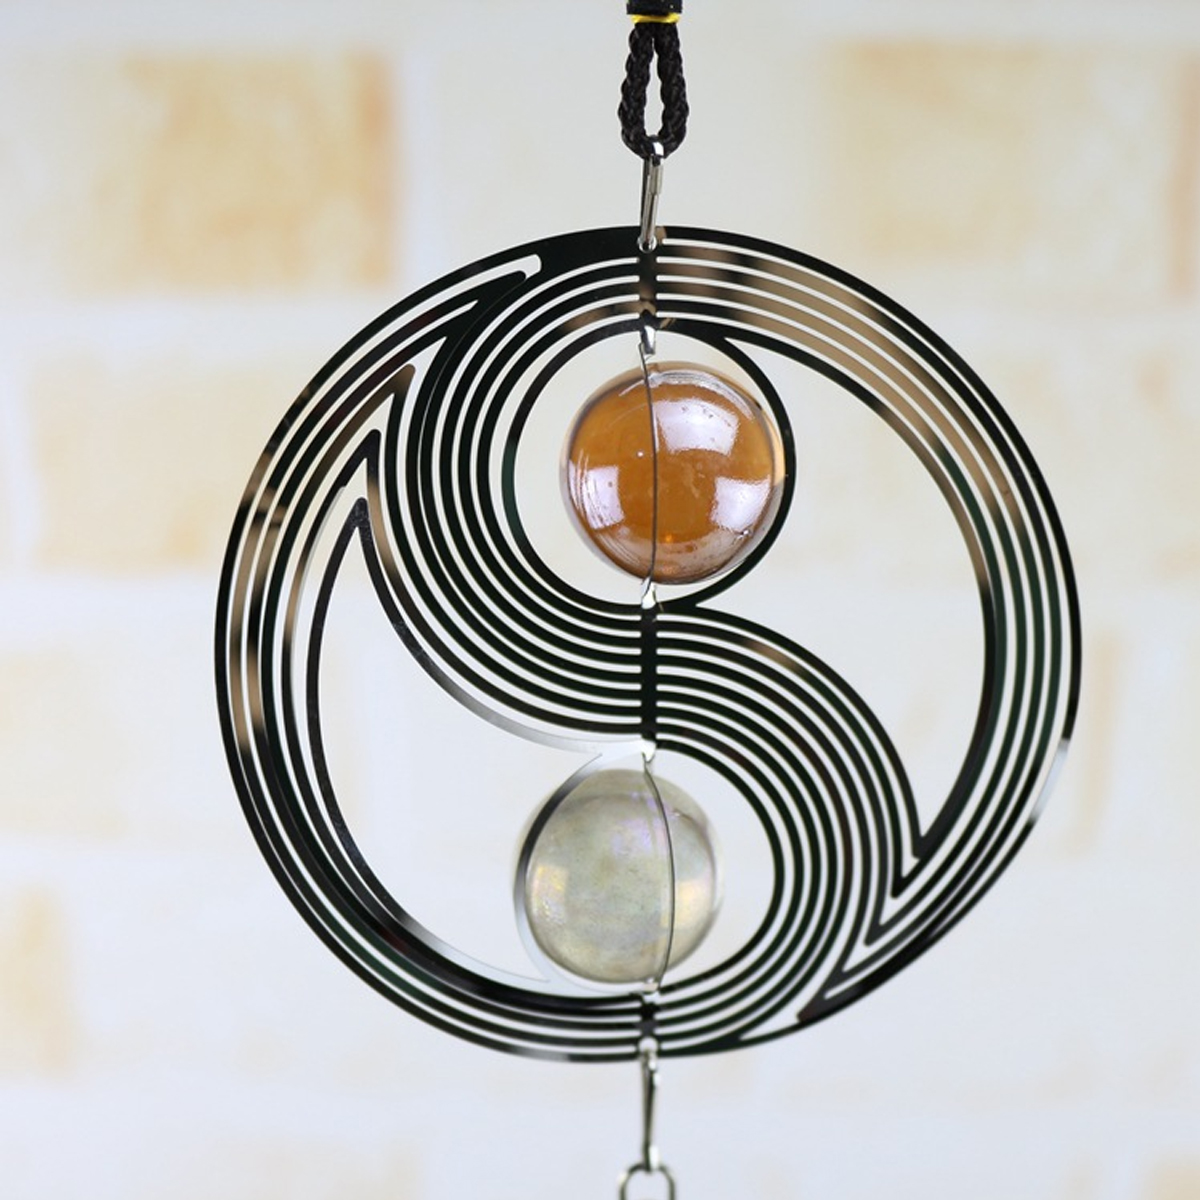 Metal-Hanging-Garden-Wind-Spinner-Round-Crystal-Ball-Bell-Garden-Home-Ornament-1682662-7